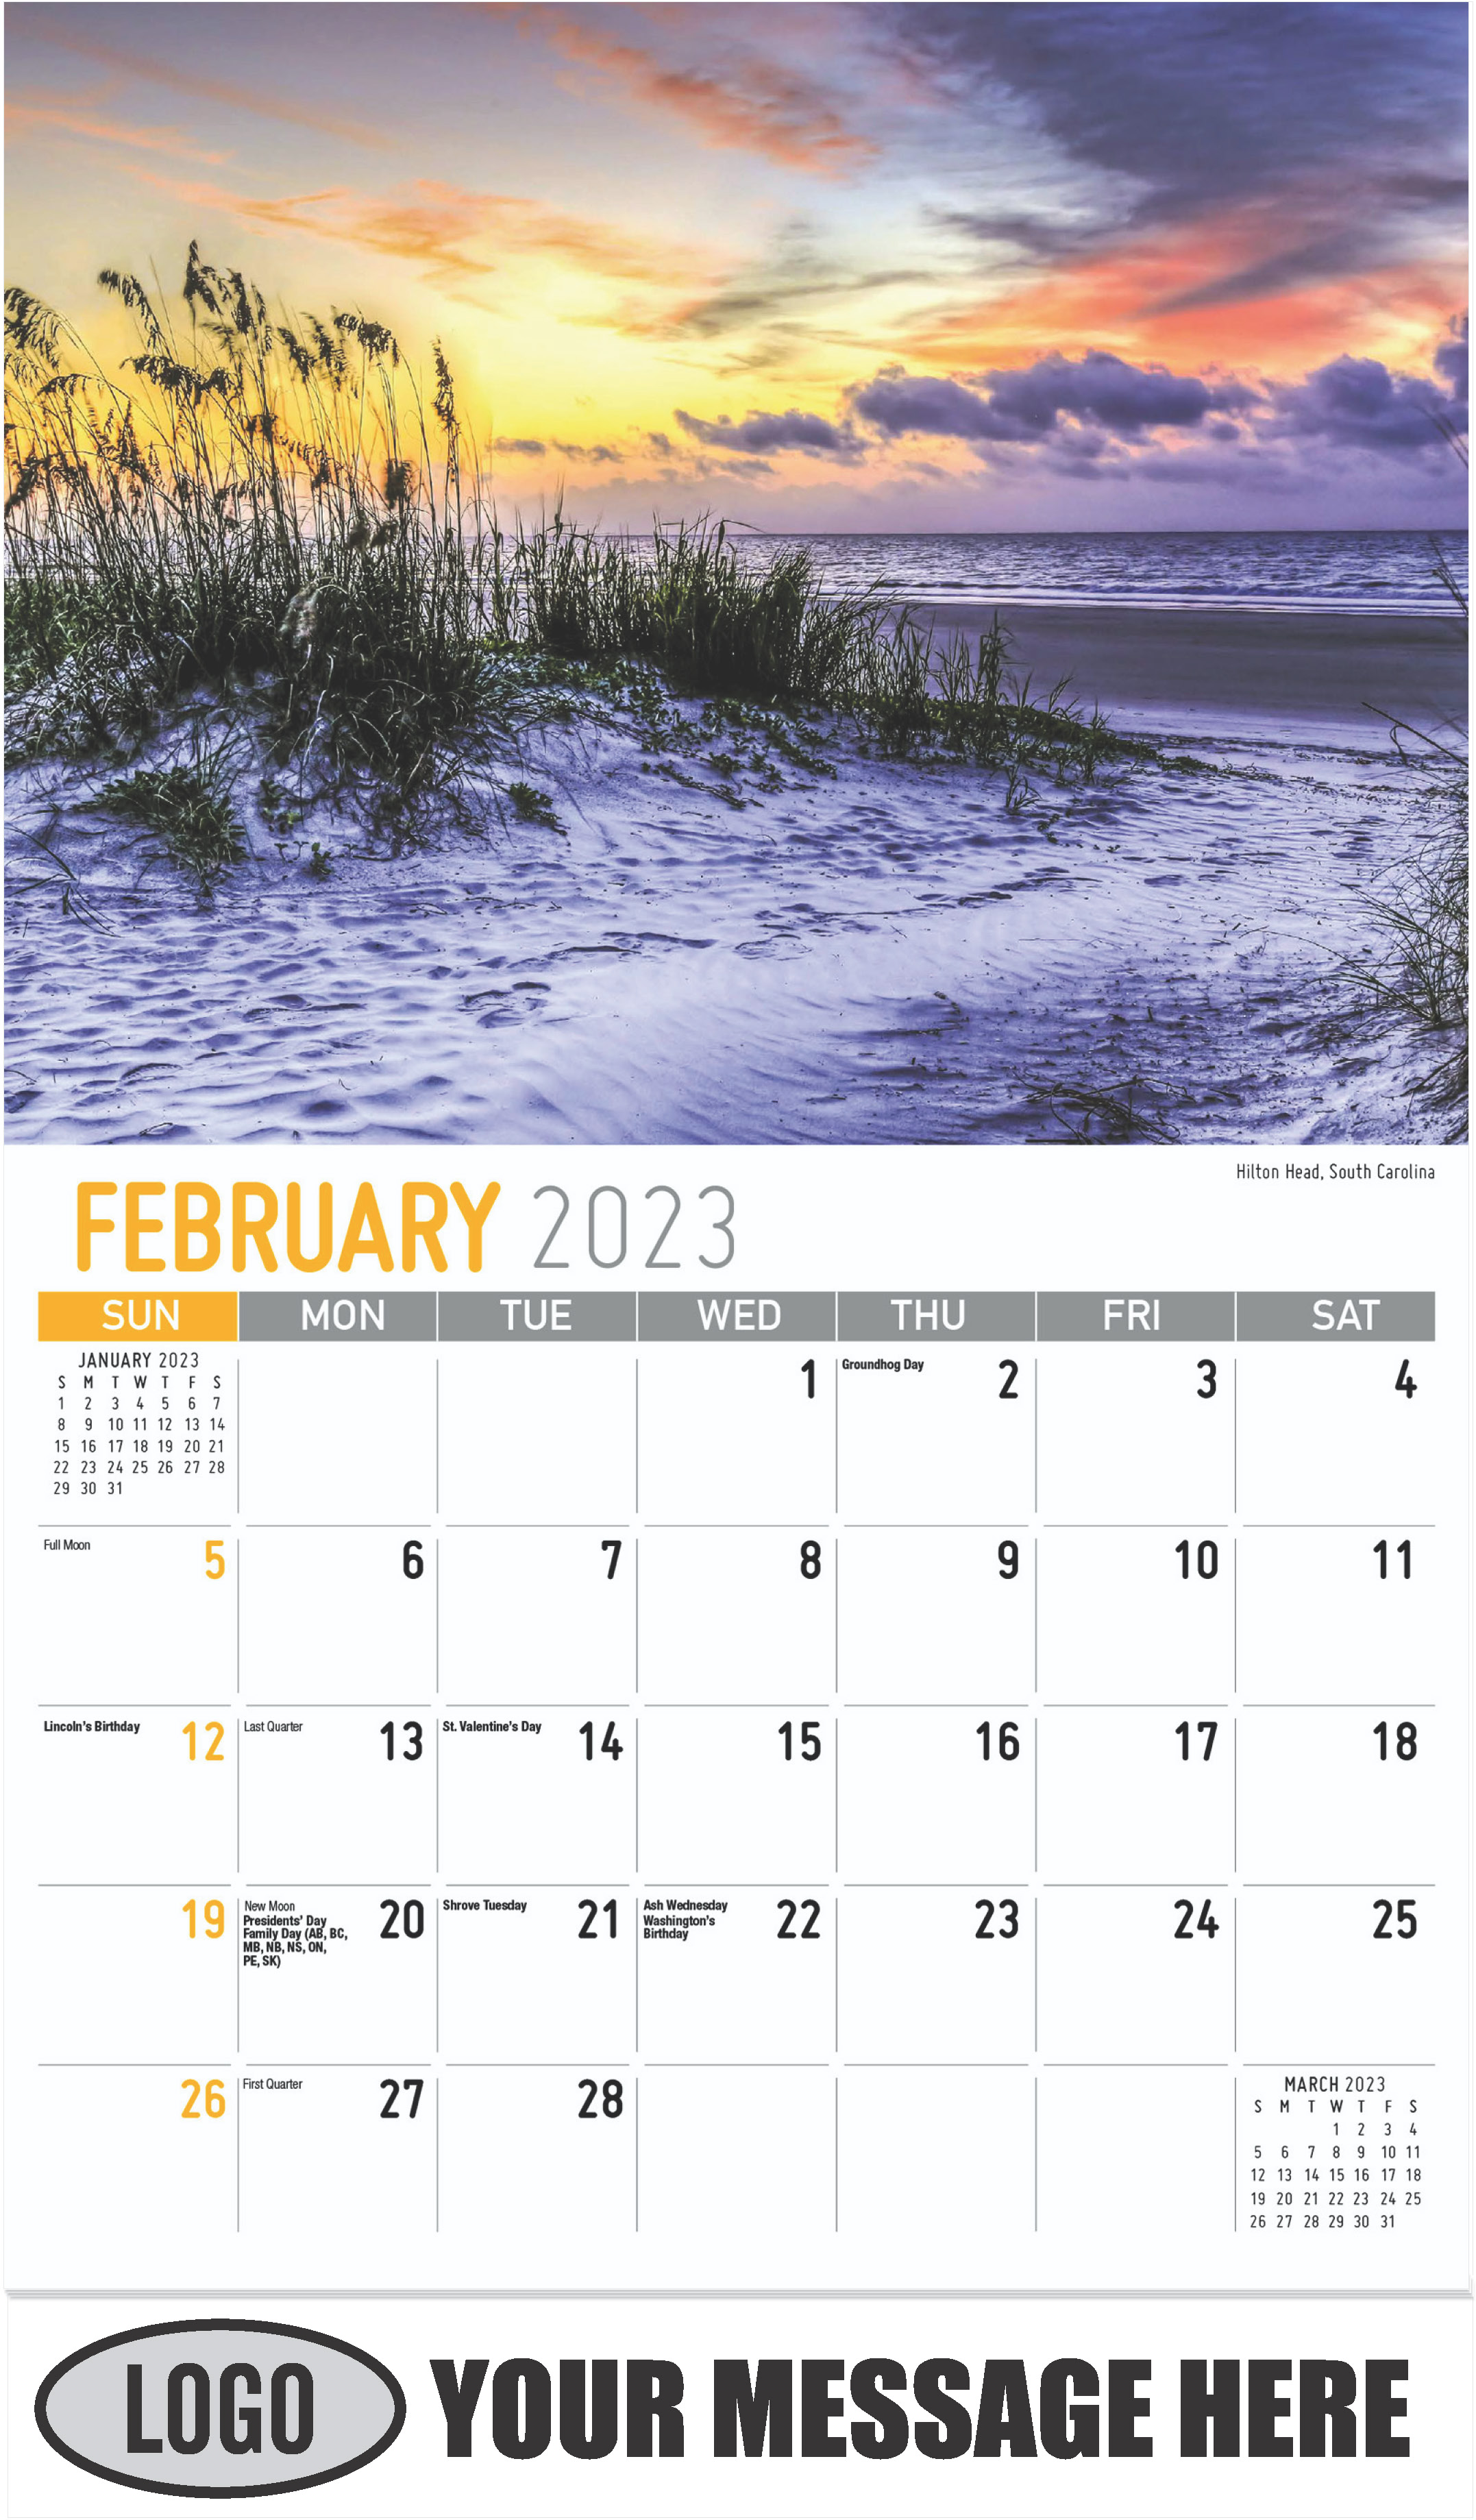 Hilton Head, South Carolina - February - Scenes of Southeast USA 2023 Promotional Calendar